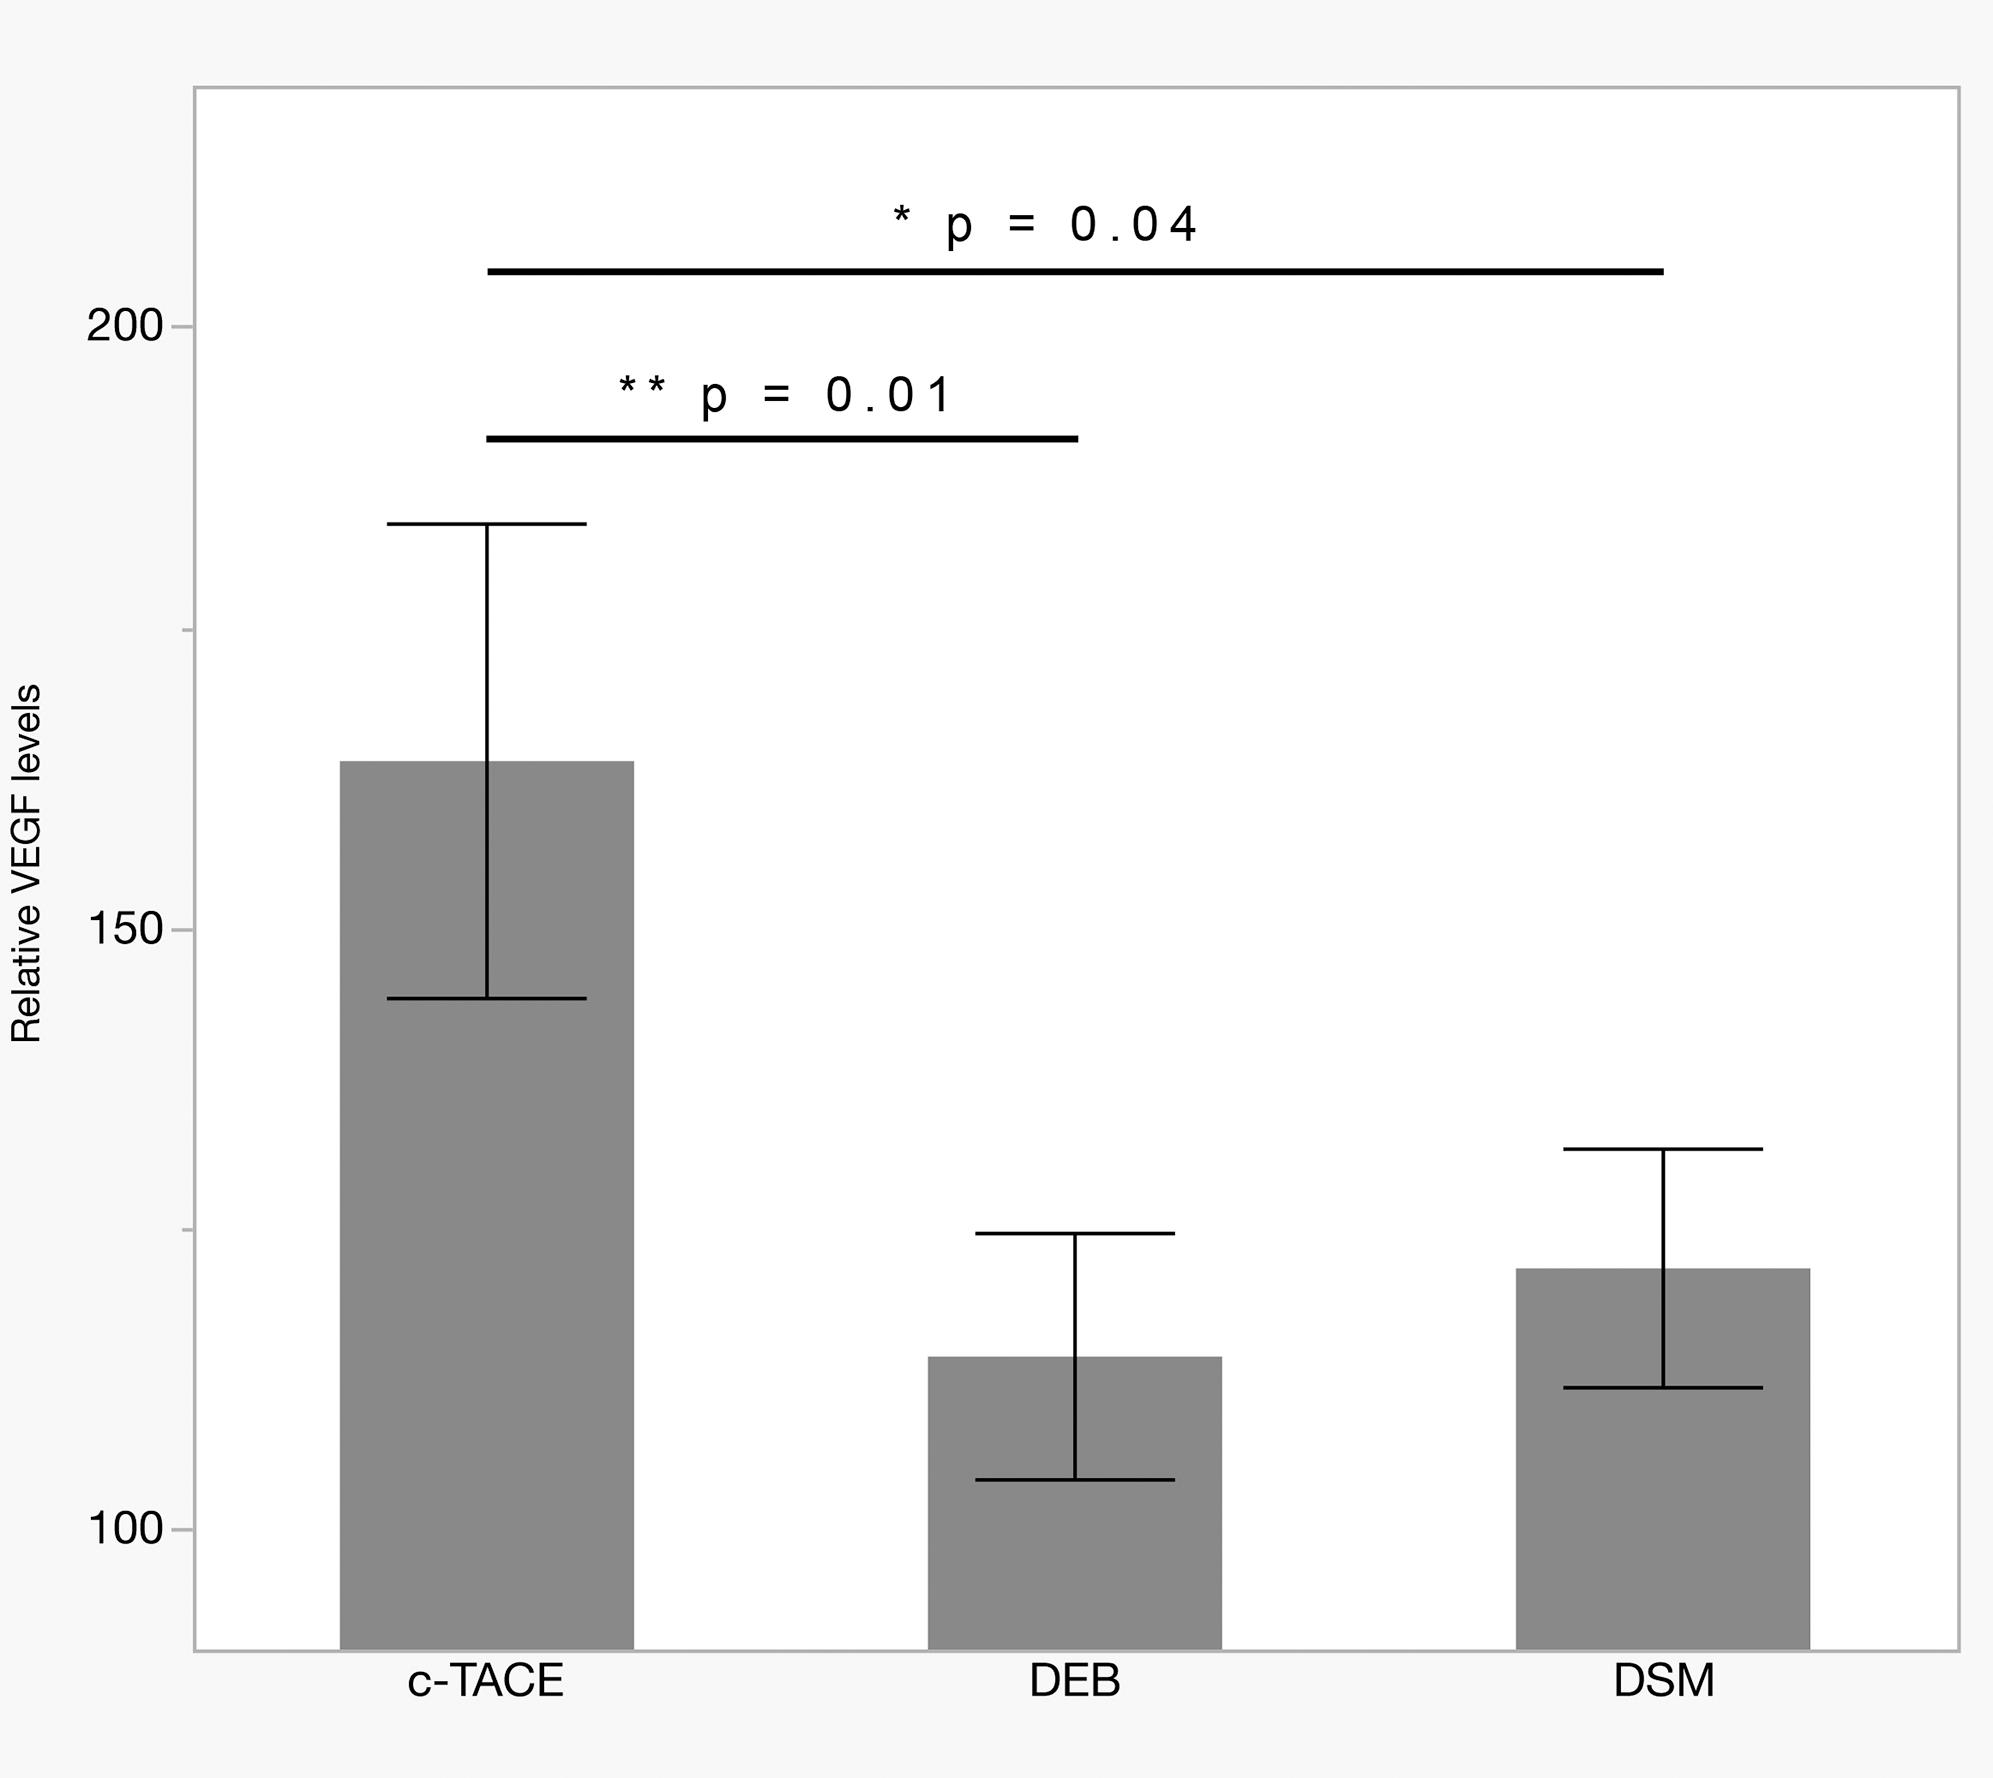 Serum VEGF levels at 24 h after cTACE with standard Lipiodol, DEB, or DSM.